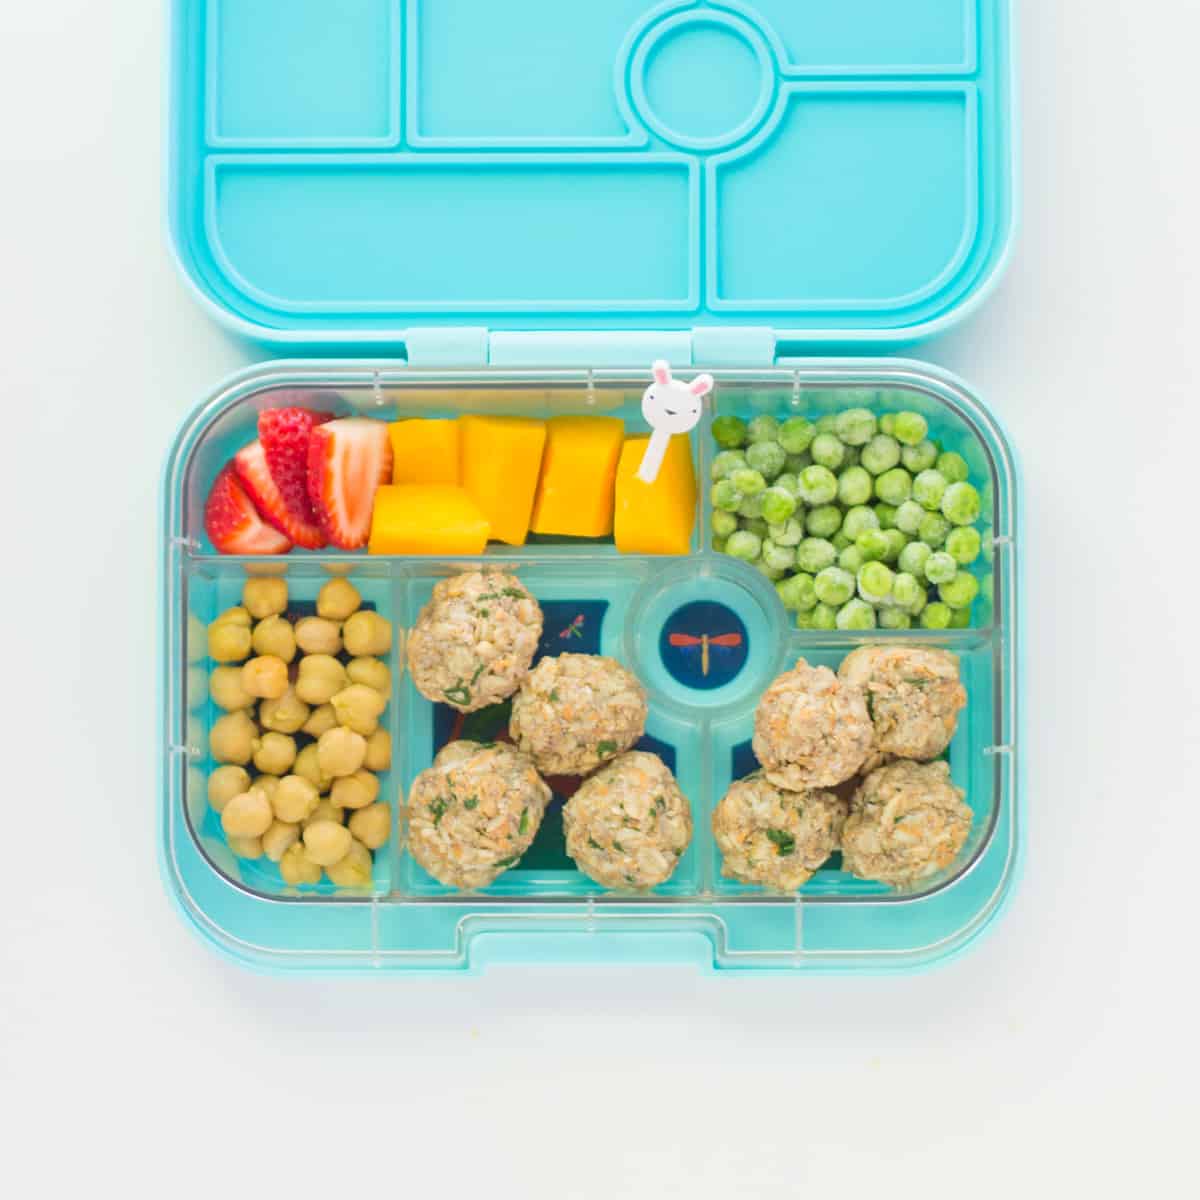 oat-balls-lunch-box.jpg